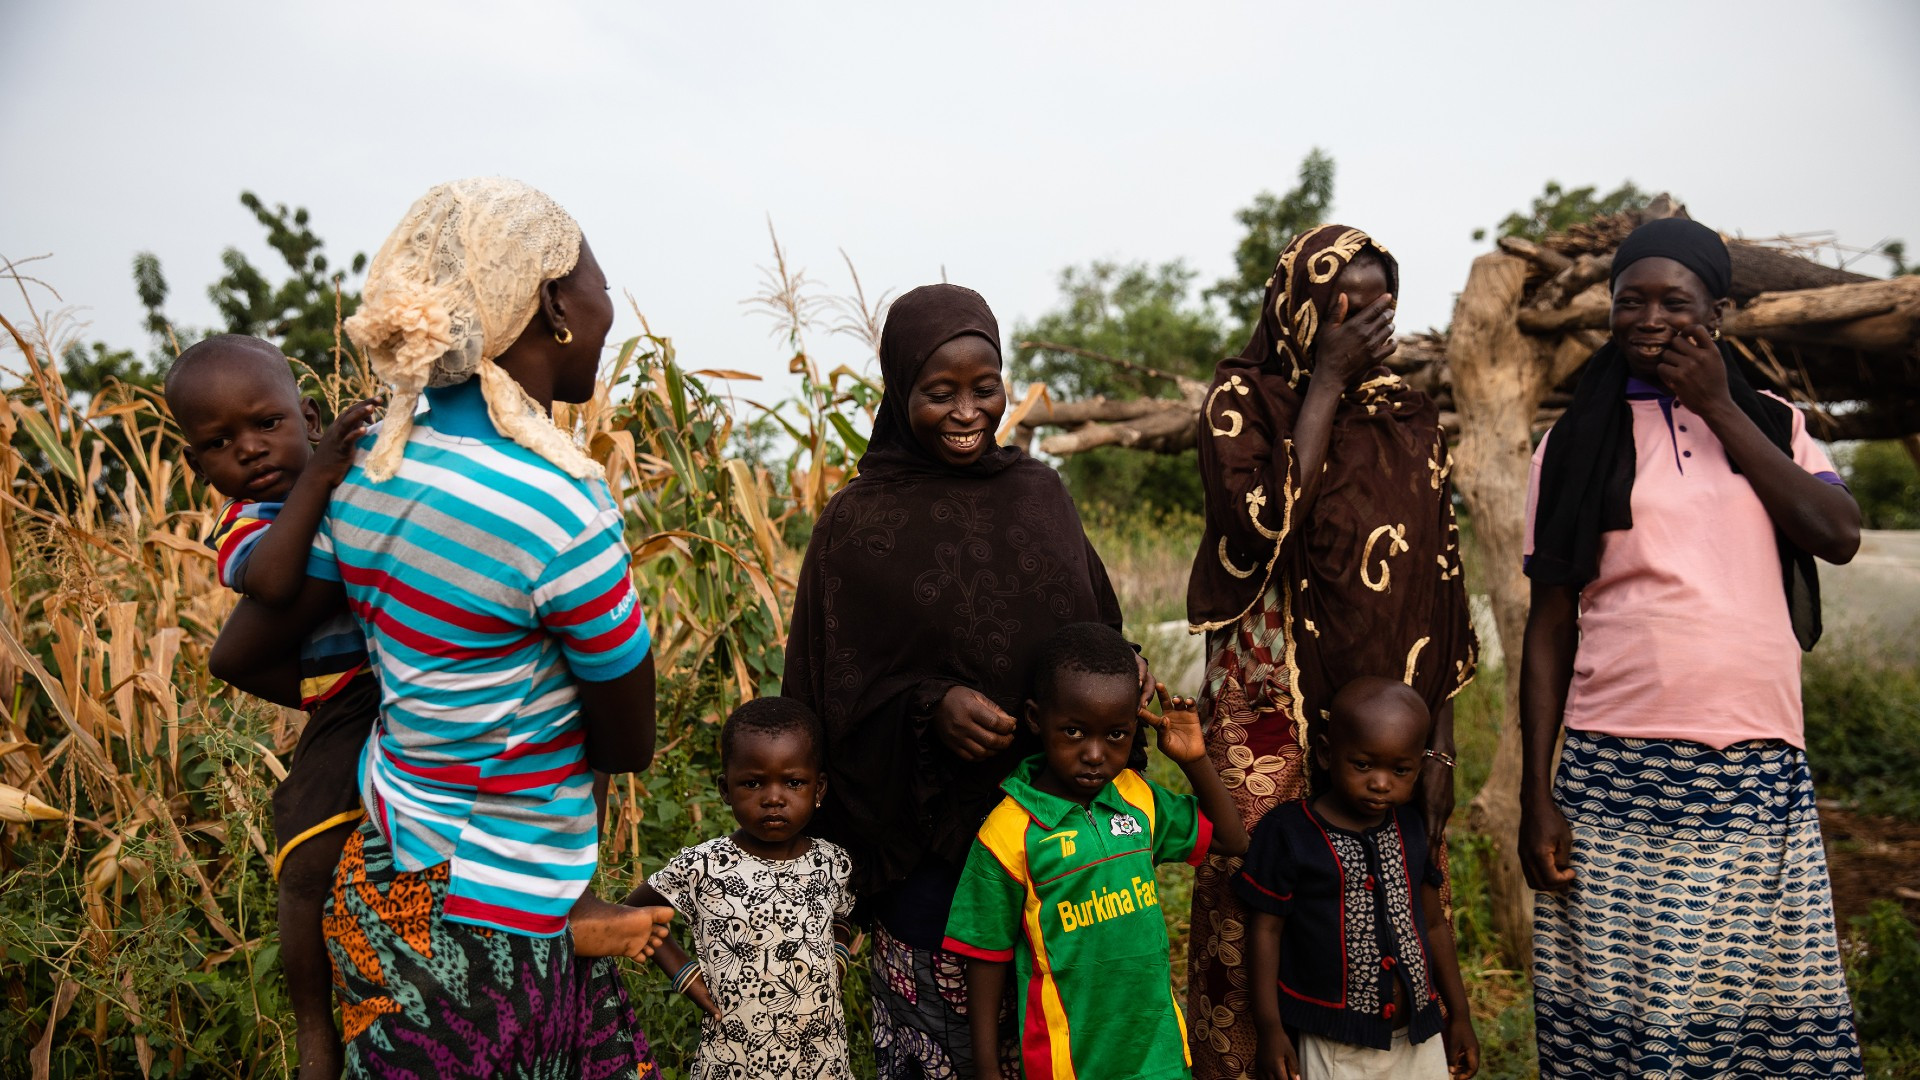 Women and children laughing in rural Burkina Faso